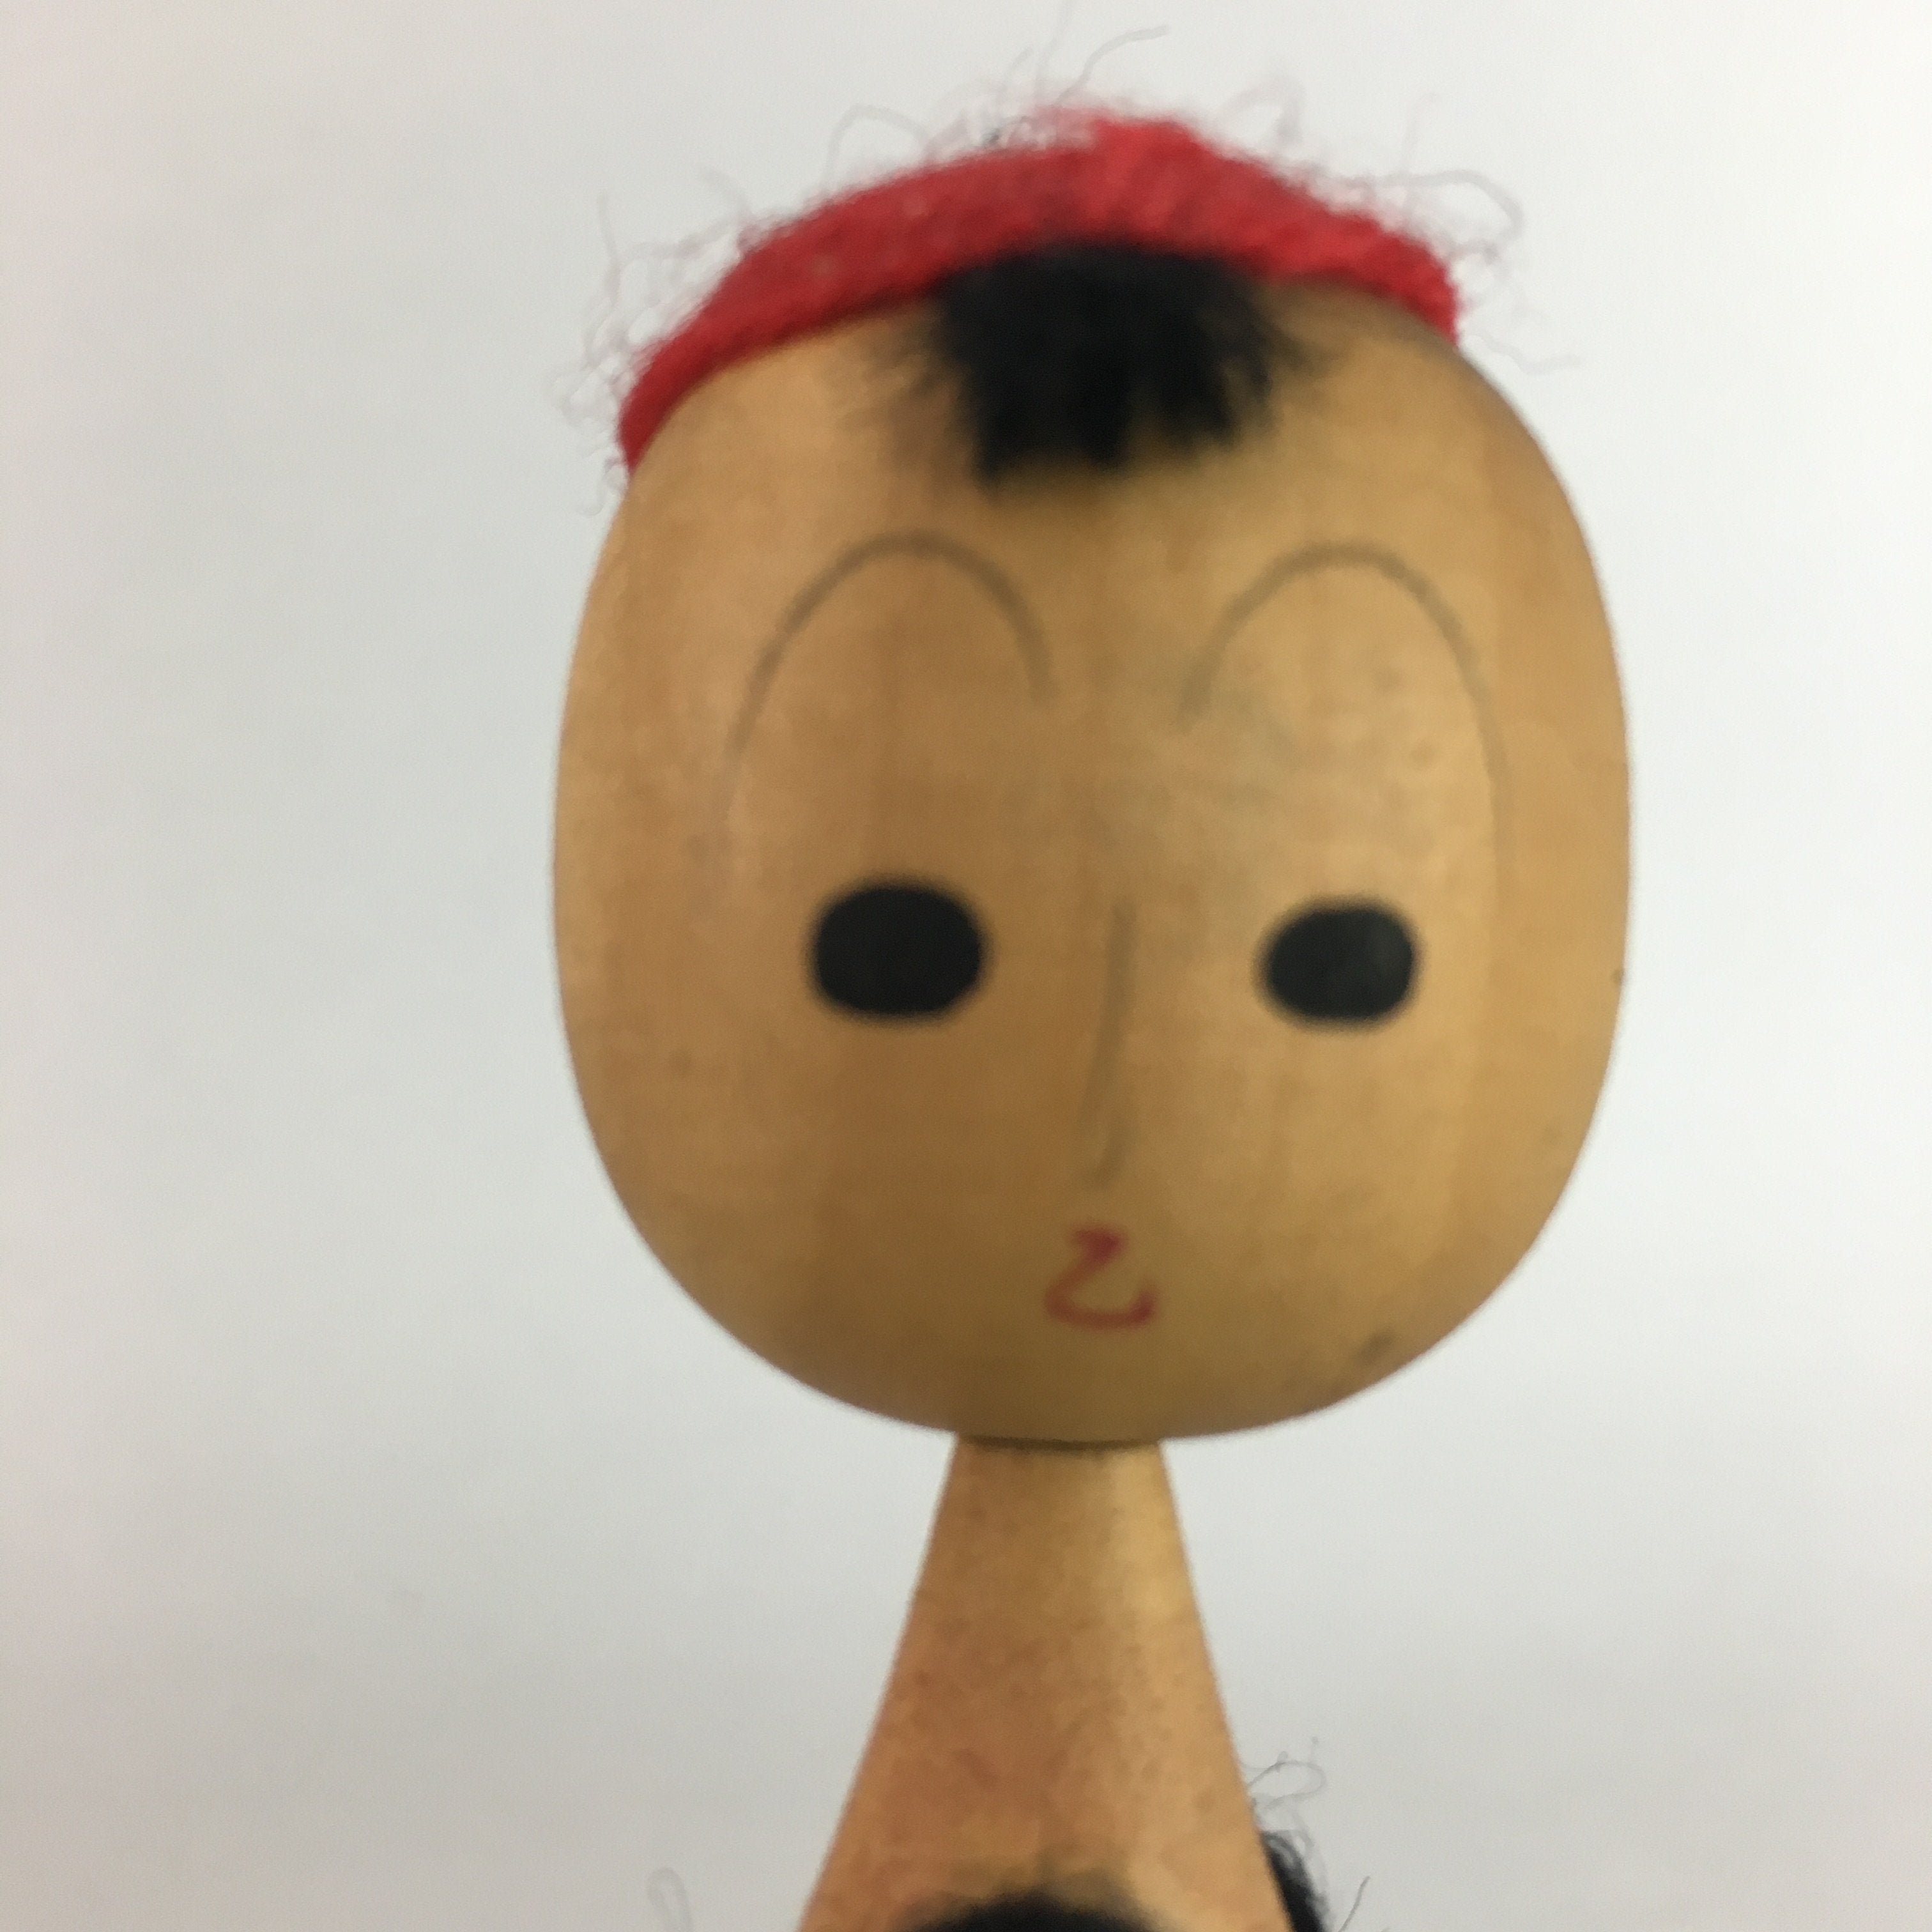 Japanese Kokeshi Doll Vtg Wood Carving Figurine Child Woolen Yarn KF149